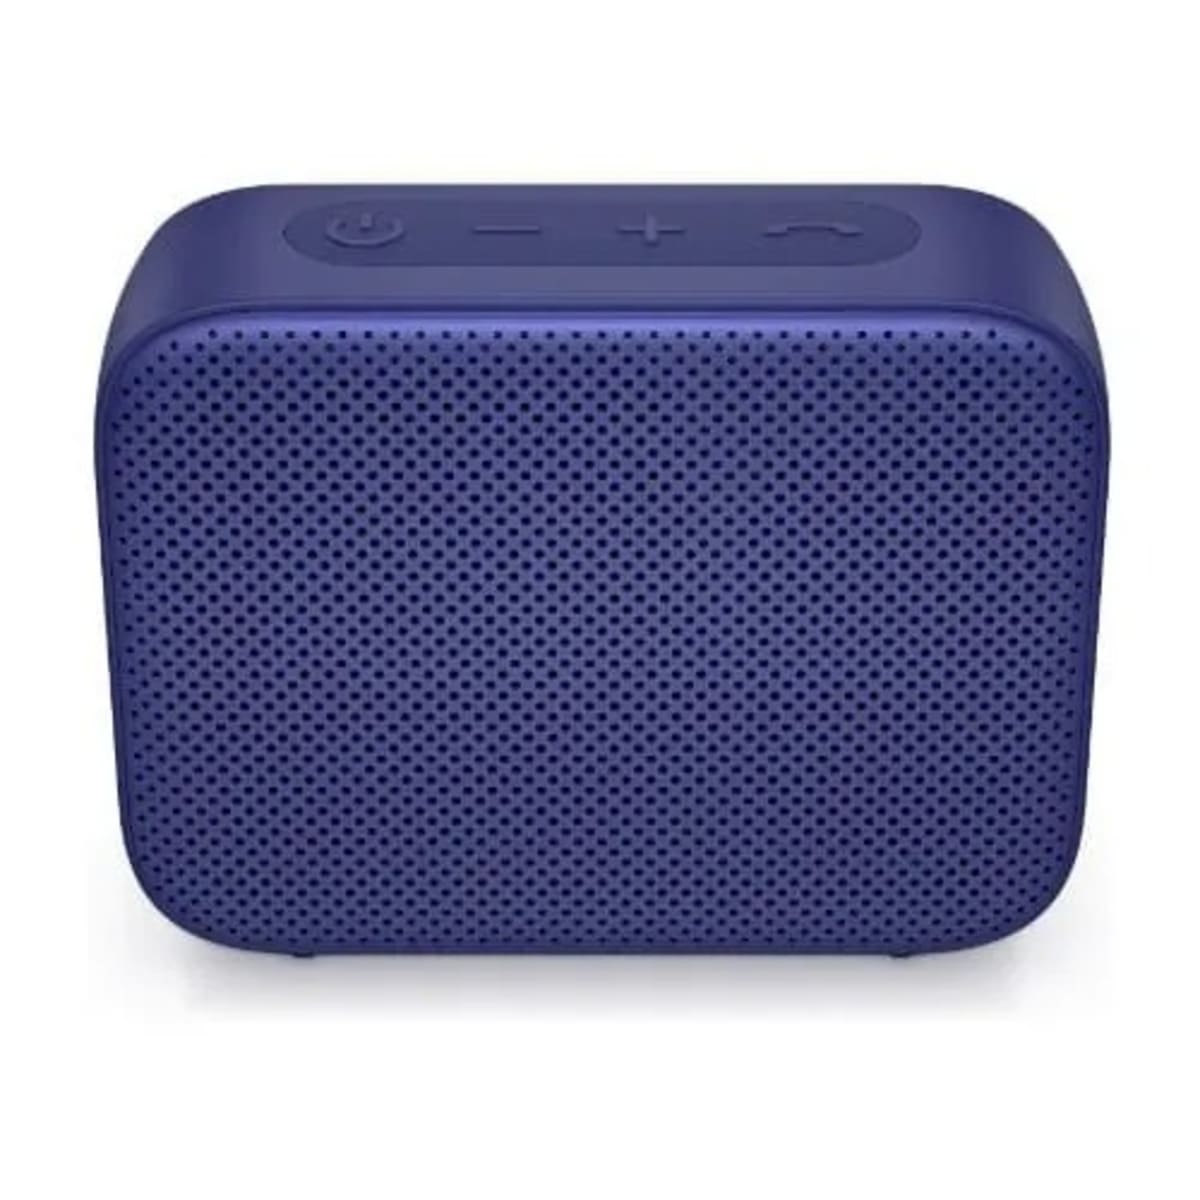 HP Bluetooth Wireless Speaker - 350 - Blue | Konga Online Shopping